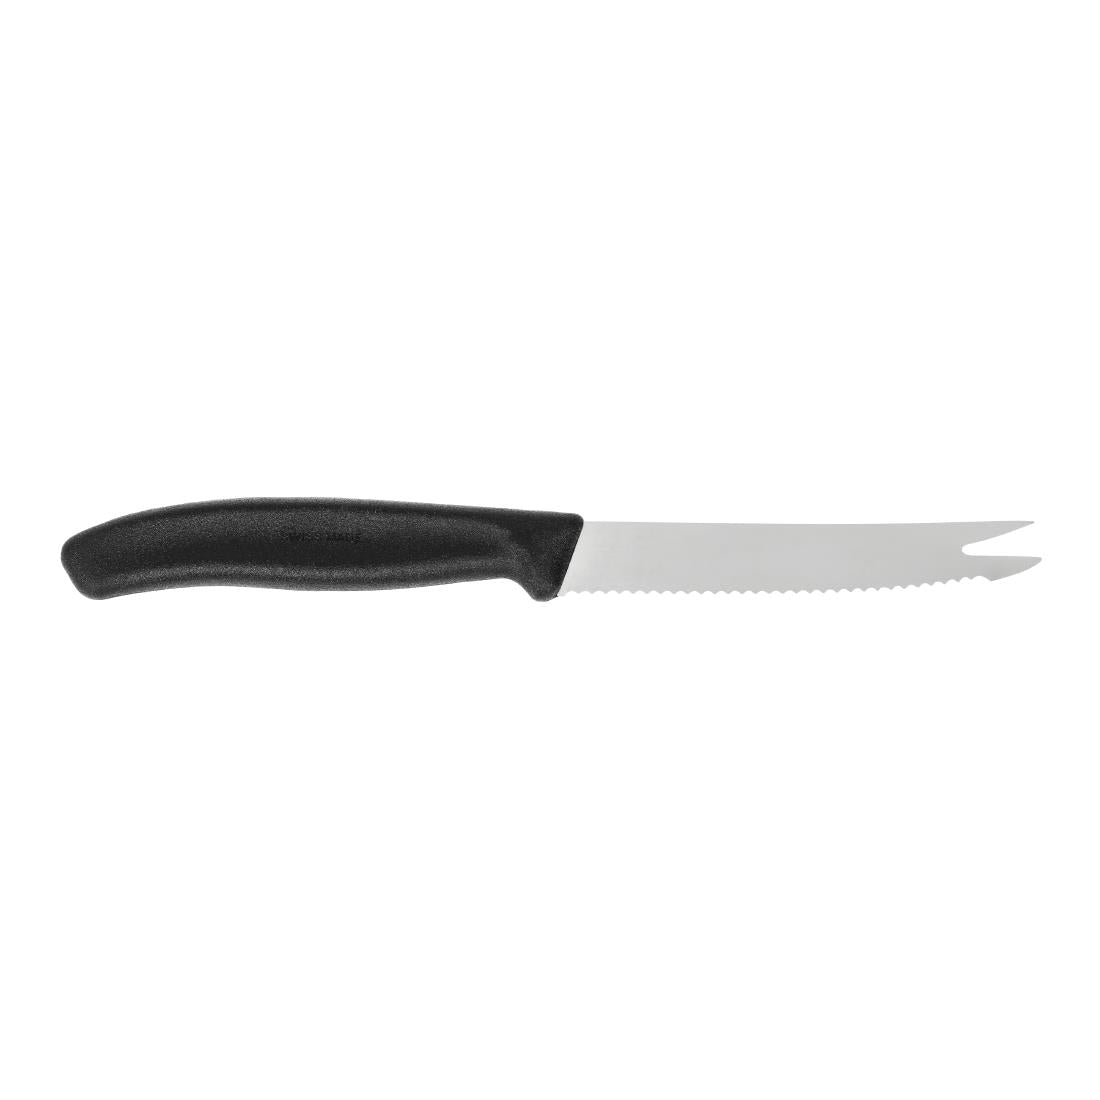 C653 Victorinox Bar Knife 12.5cm